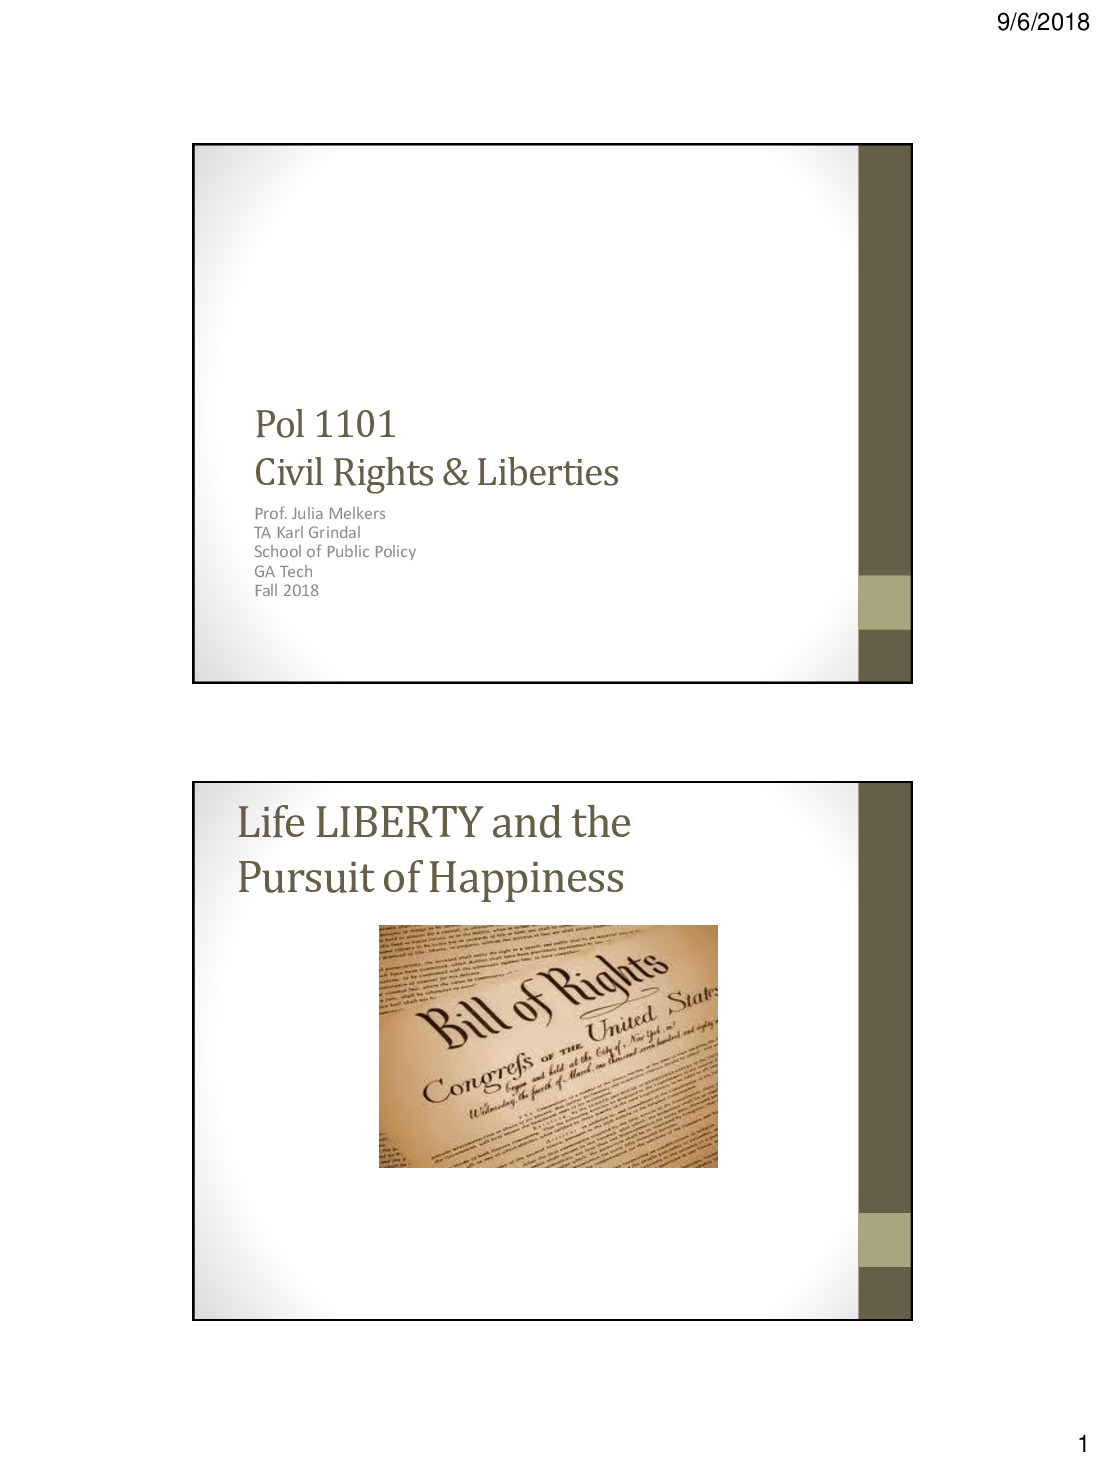 Pol_1101_Civil_rights___liberties_lecture_fall_2018_full_week.pdf